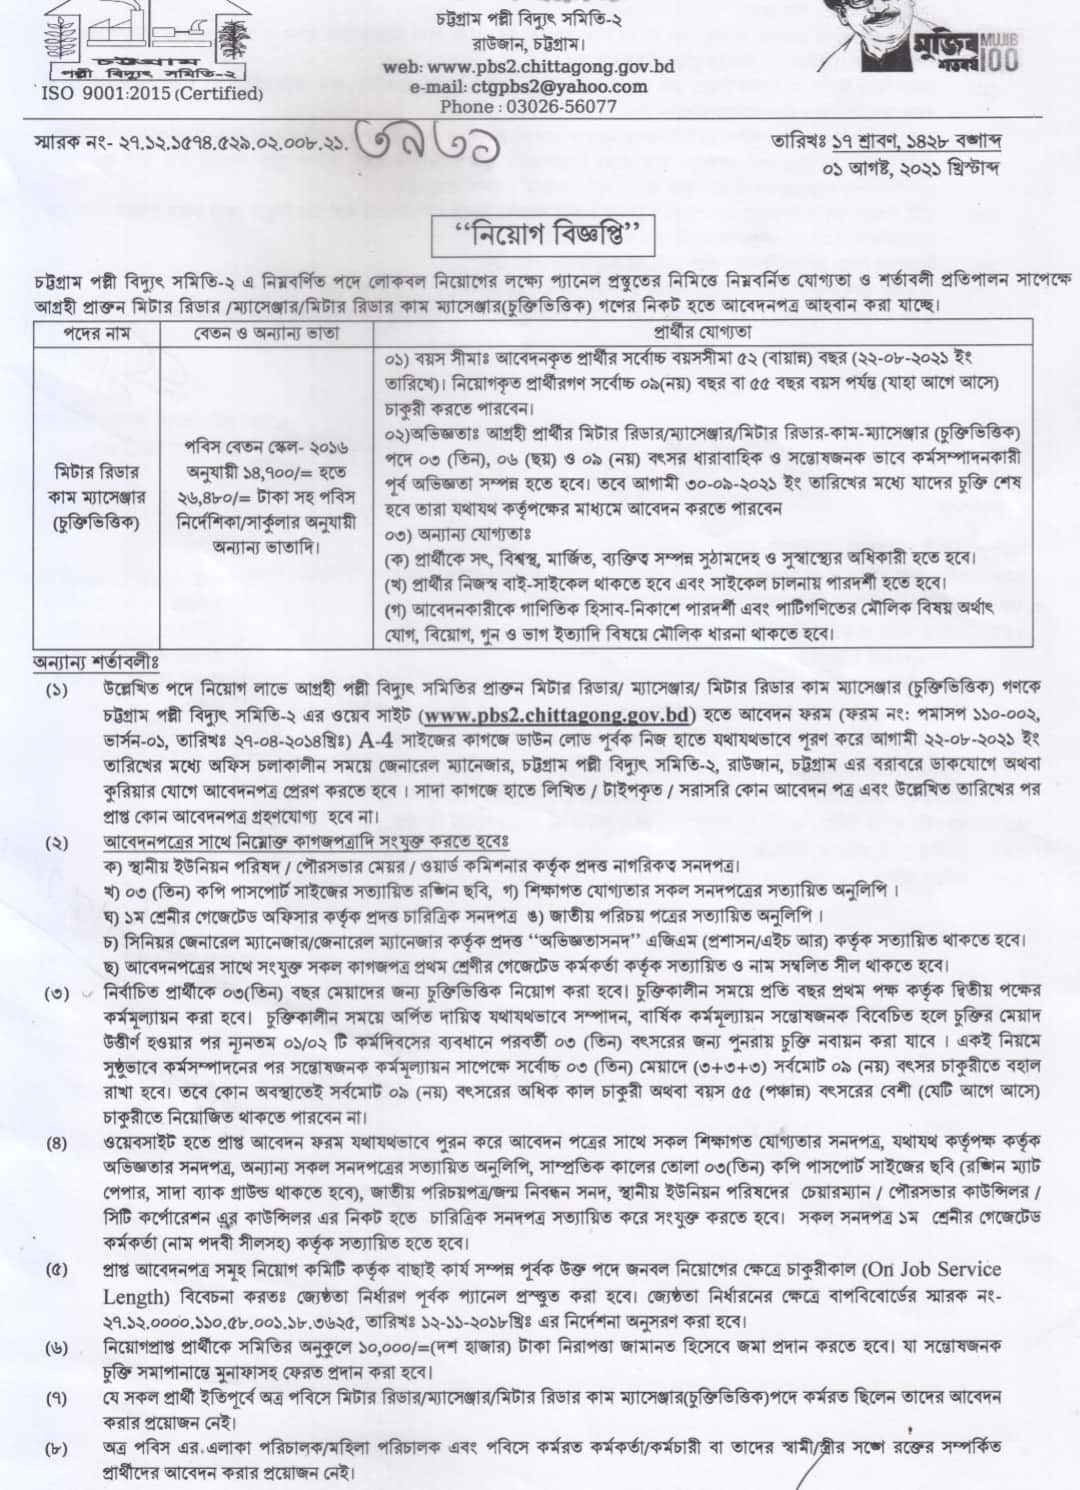 Chittagong Palli Bidyut Samity Job circular